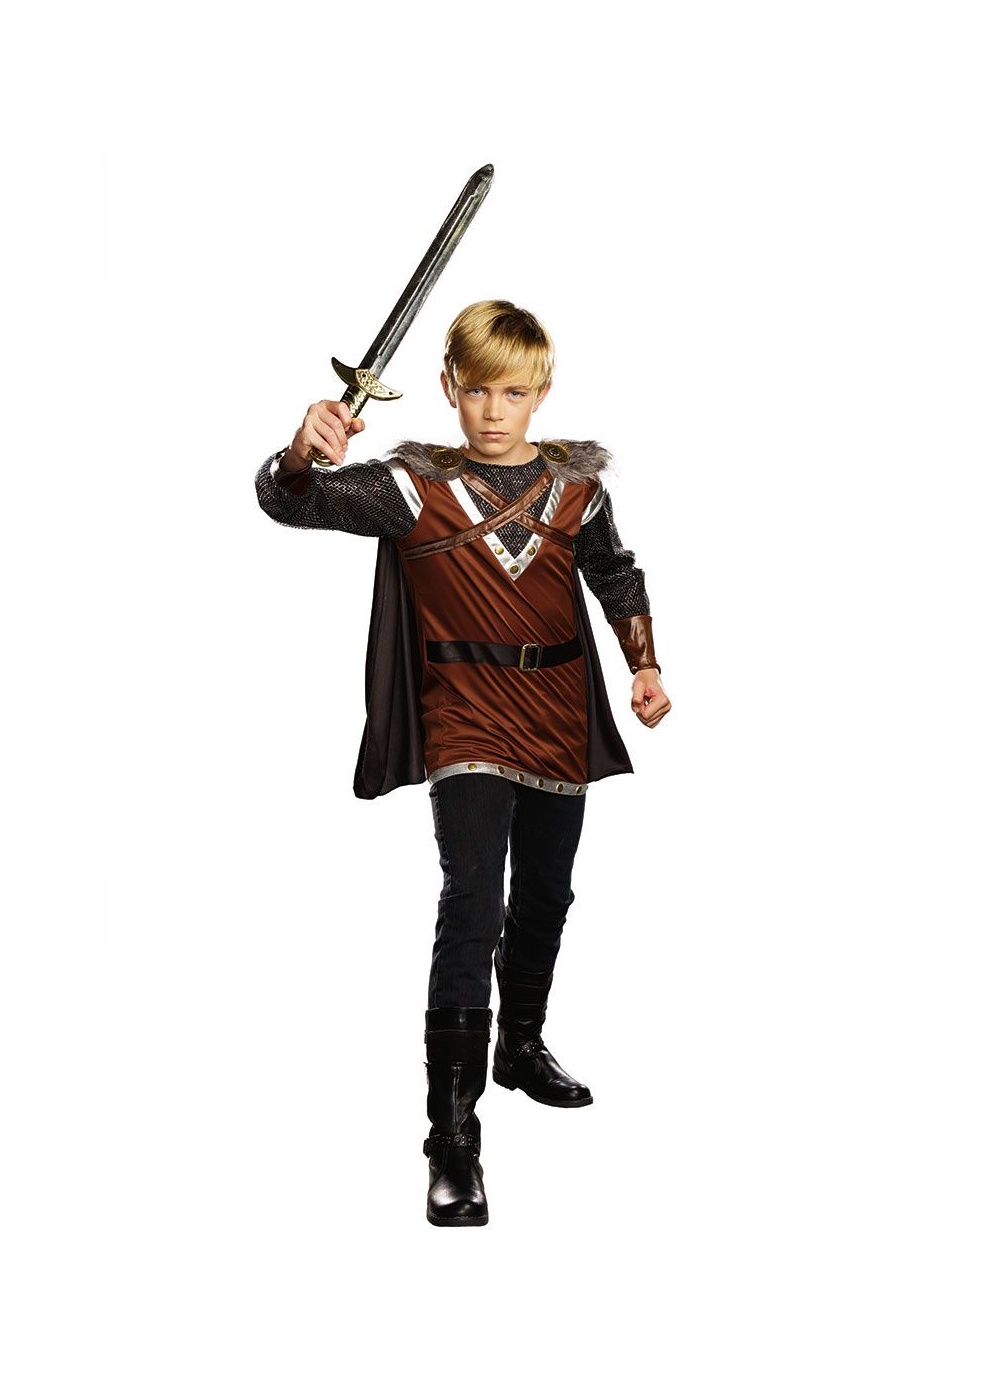  Boys Warrior Knight Costume